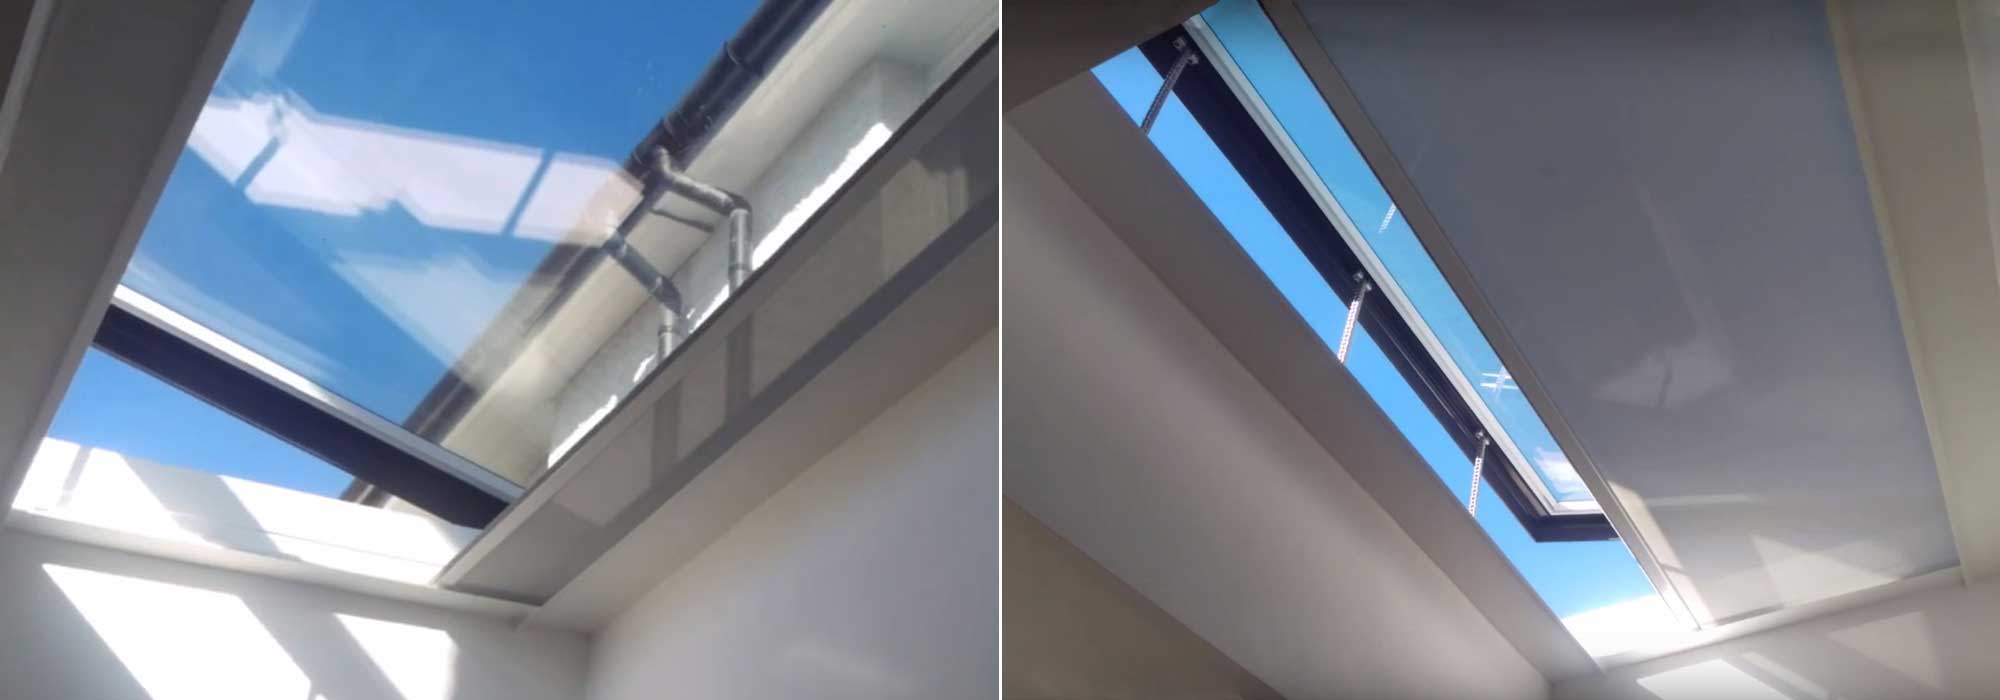 smart rooflight blinds